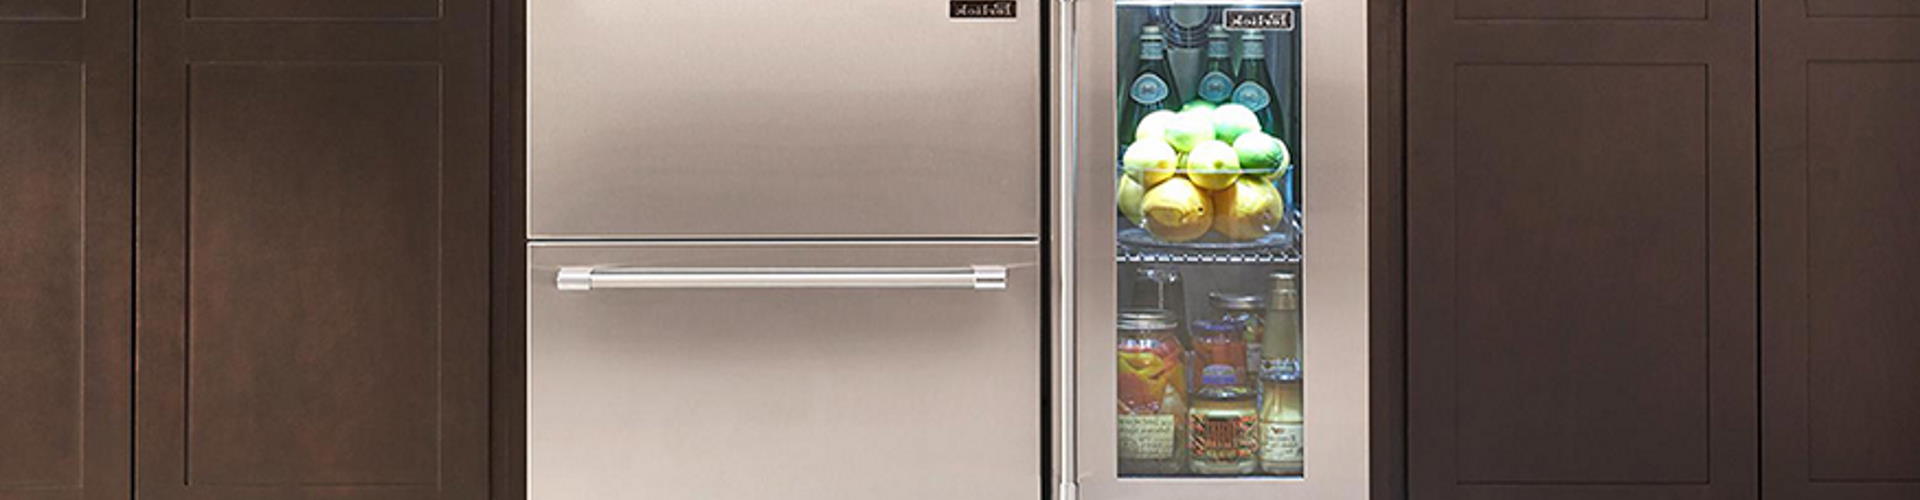 How to diagnose undercoutner subzero refrigerator